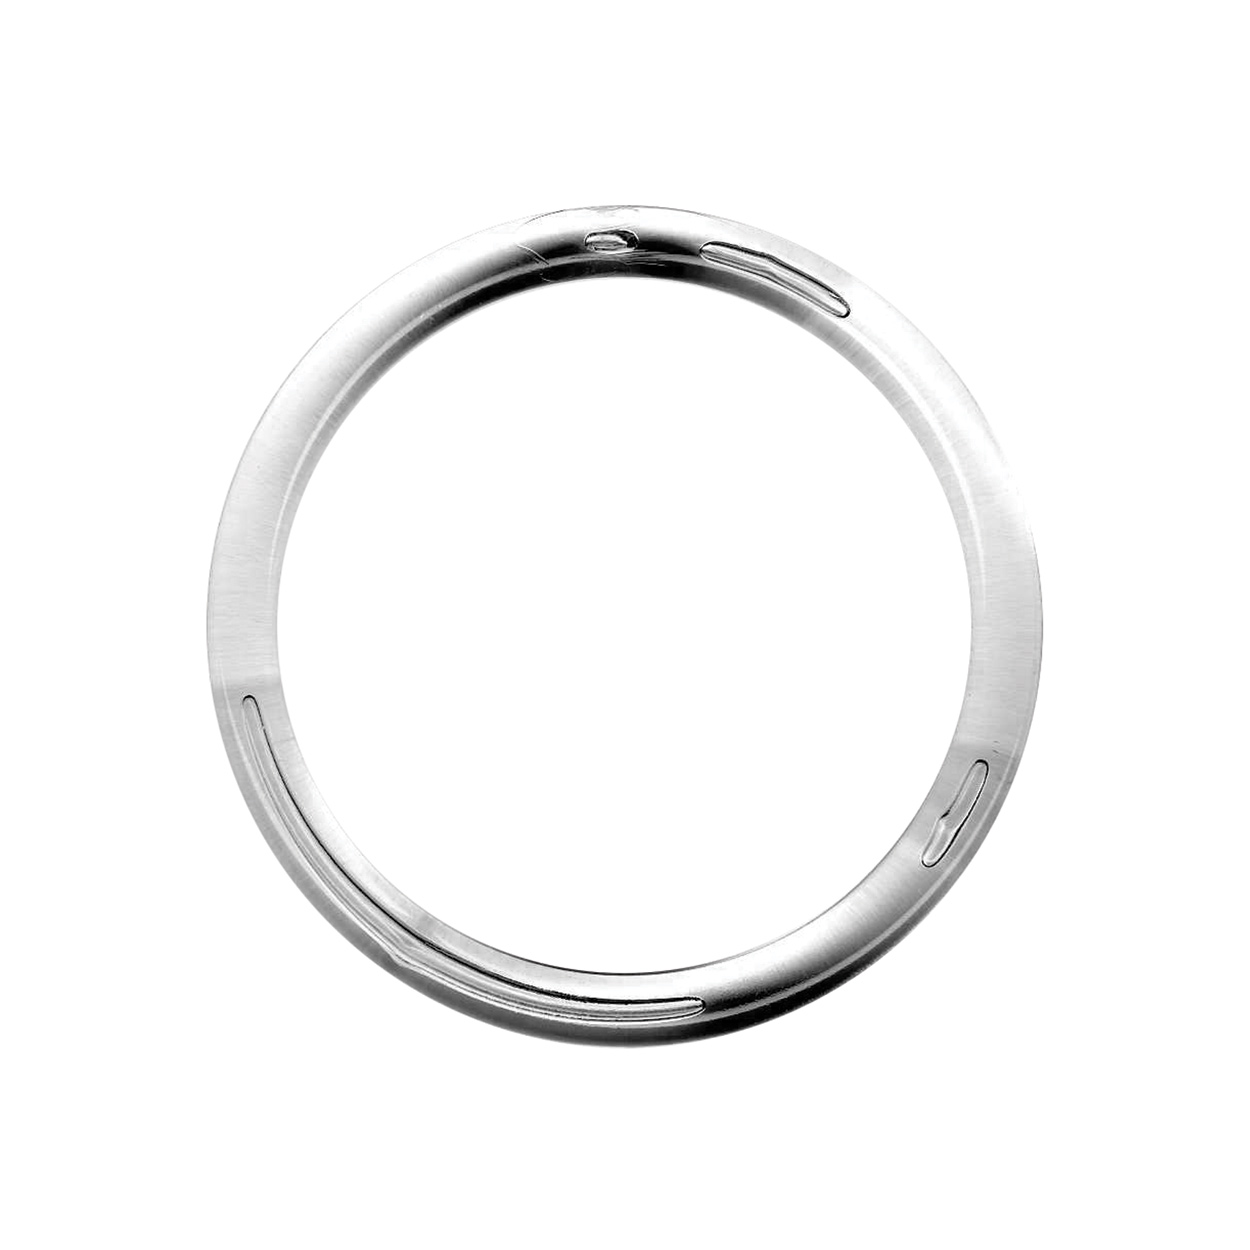 Pack of 10 Acrylic Display Ring For Scarves or ties. Diameter 70mm ...